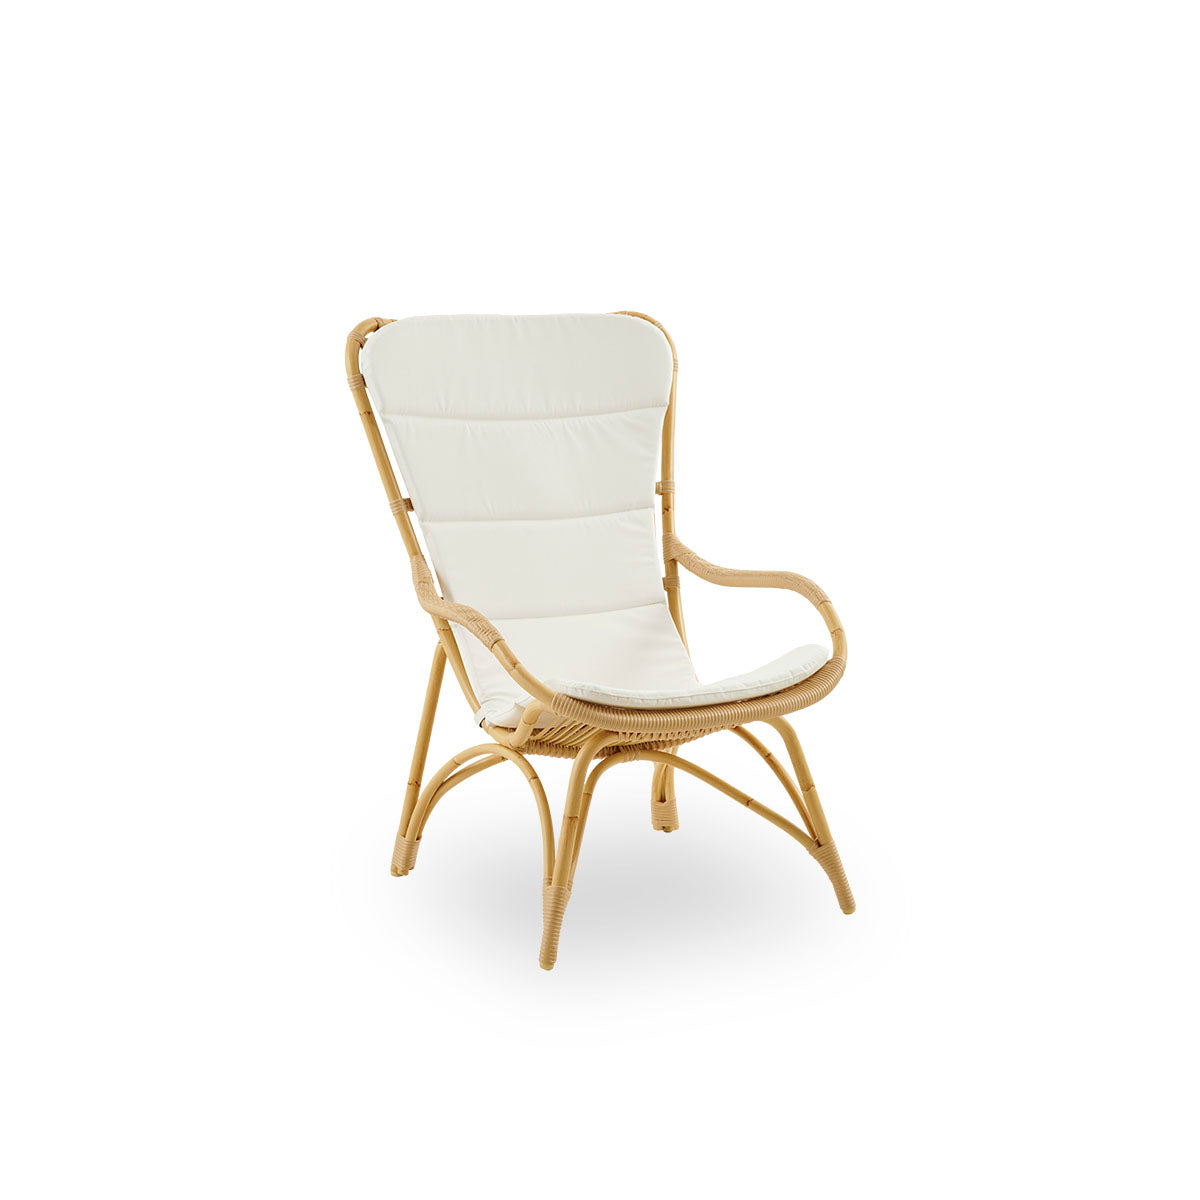 Monet Exterior Lounge Chair